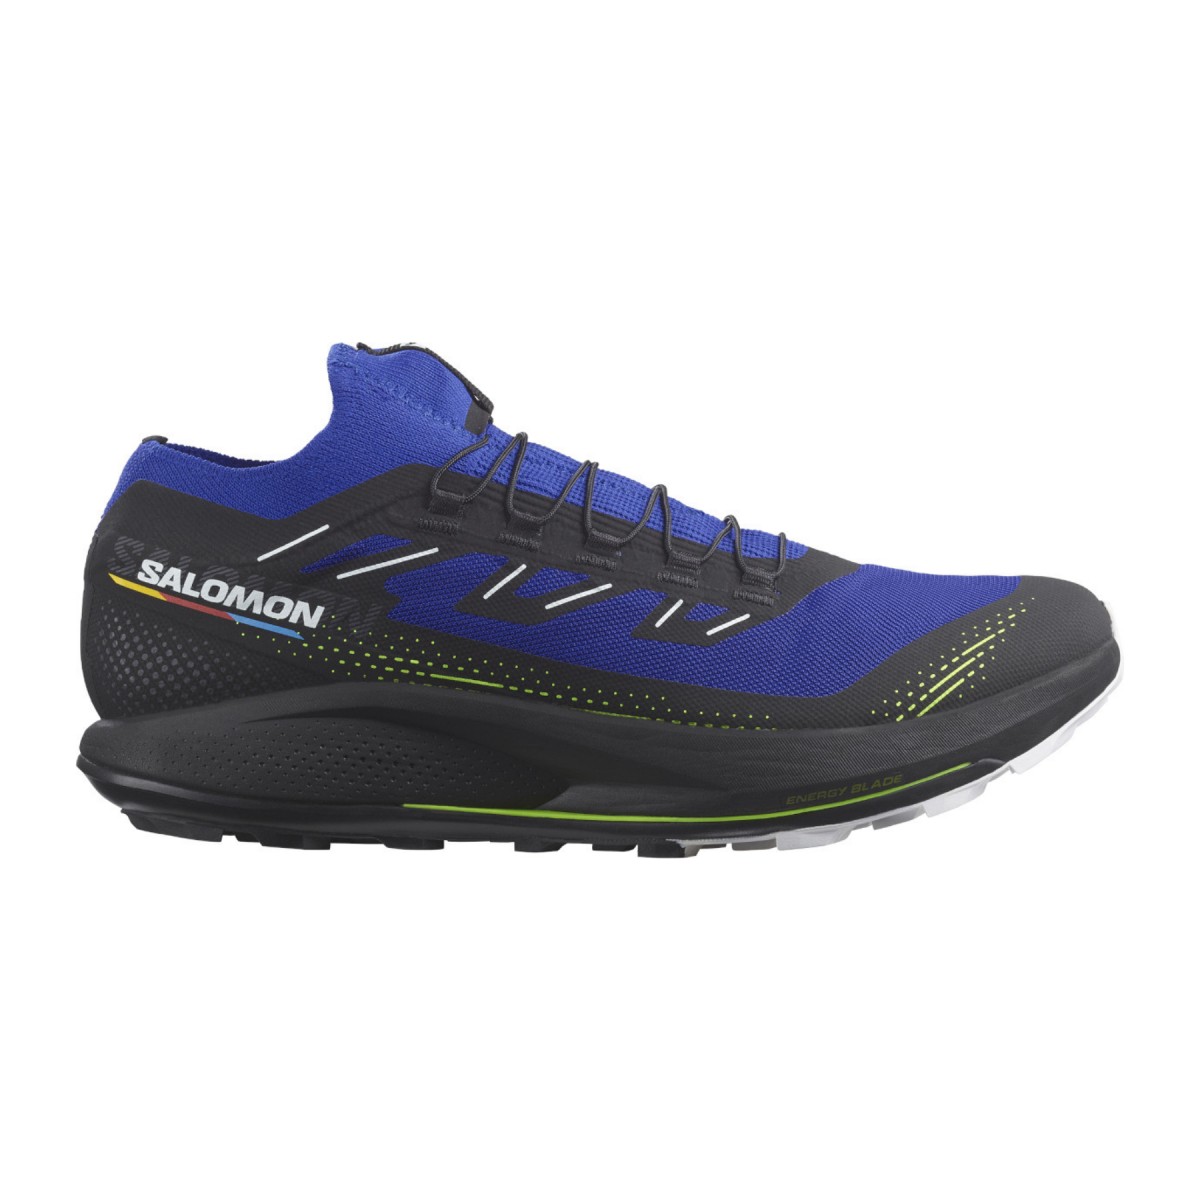 Schuhe Salomon Pulsar Trail Pro 2 Blau Schwarz AW23, Größe EU 46